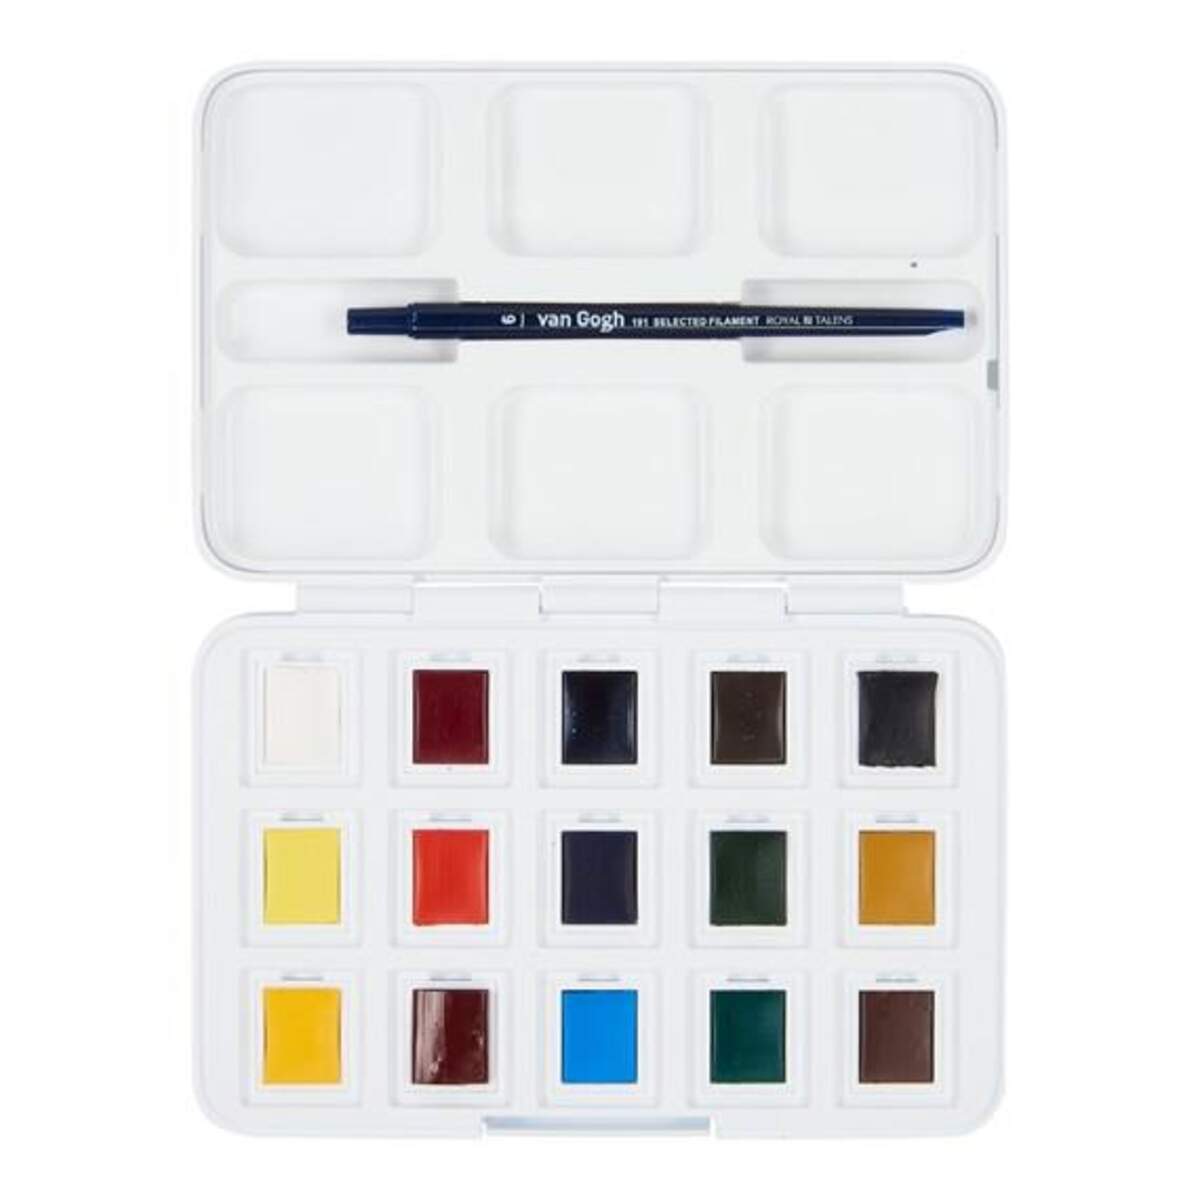 Royal Talens Van Gogh Basiskasten Aquarellfarben mit 12 Farben in Halbschalen + 3 Farben gratis